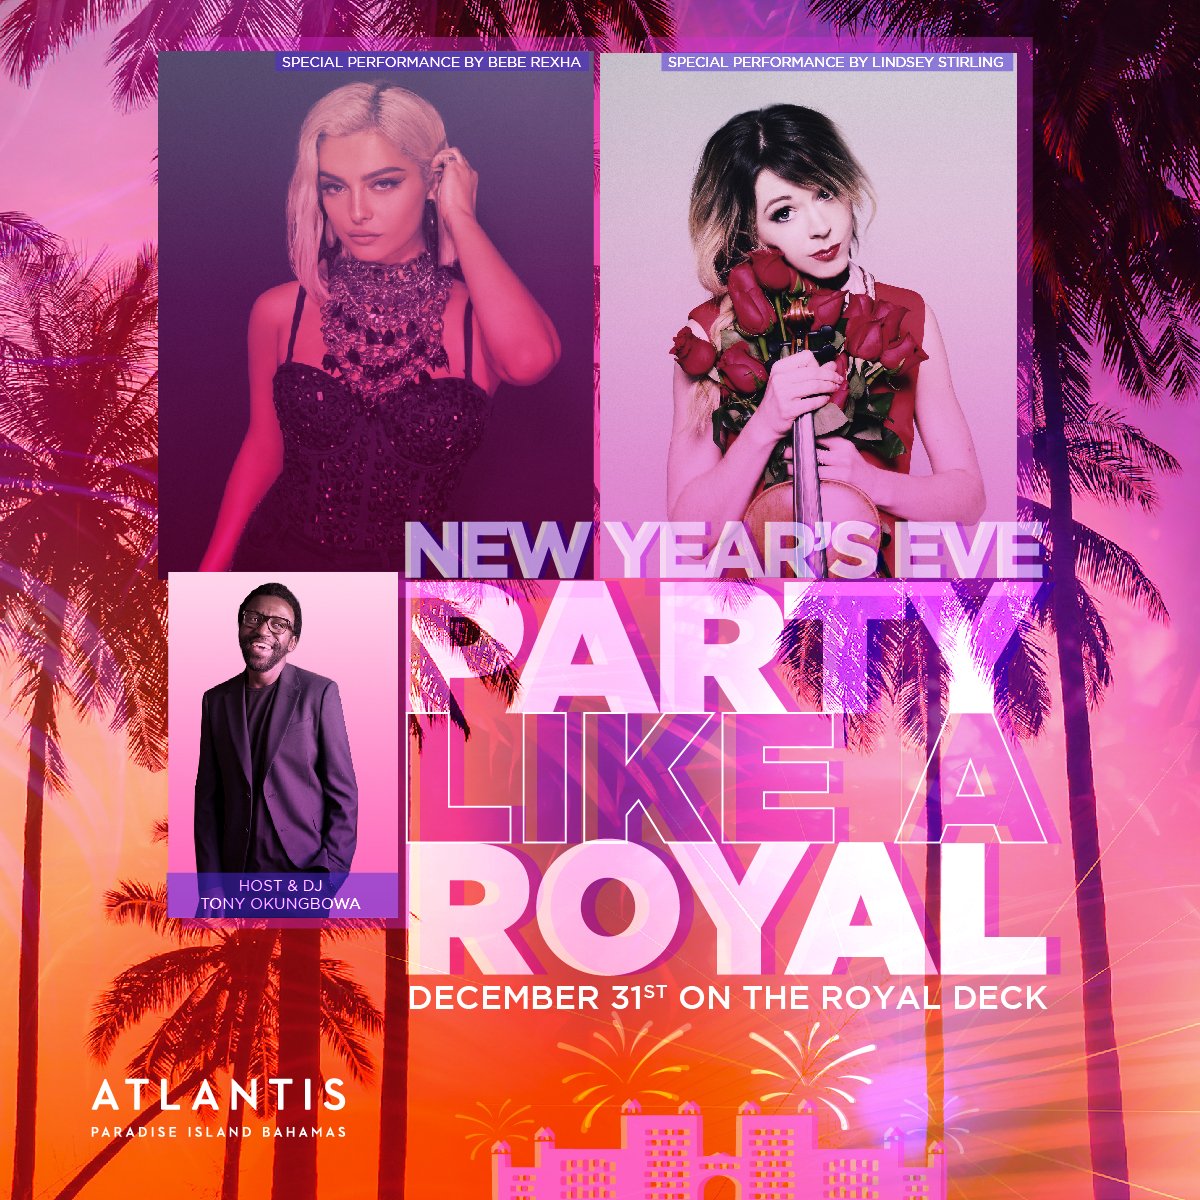 This New Year’s Eve, Party Like A Royal with me, @BebeRexha, @TONYOK, and more at @atlantisbahamas! 
Visit PartyLikeARoyalAtlantis.com 
#PartyLikeARoyal #NYE2019 #AtlantisBahamas